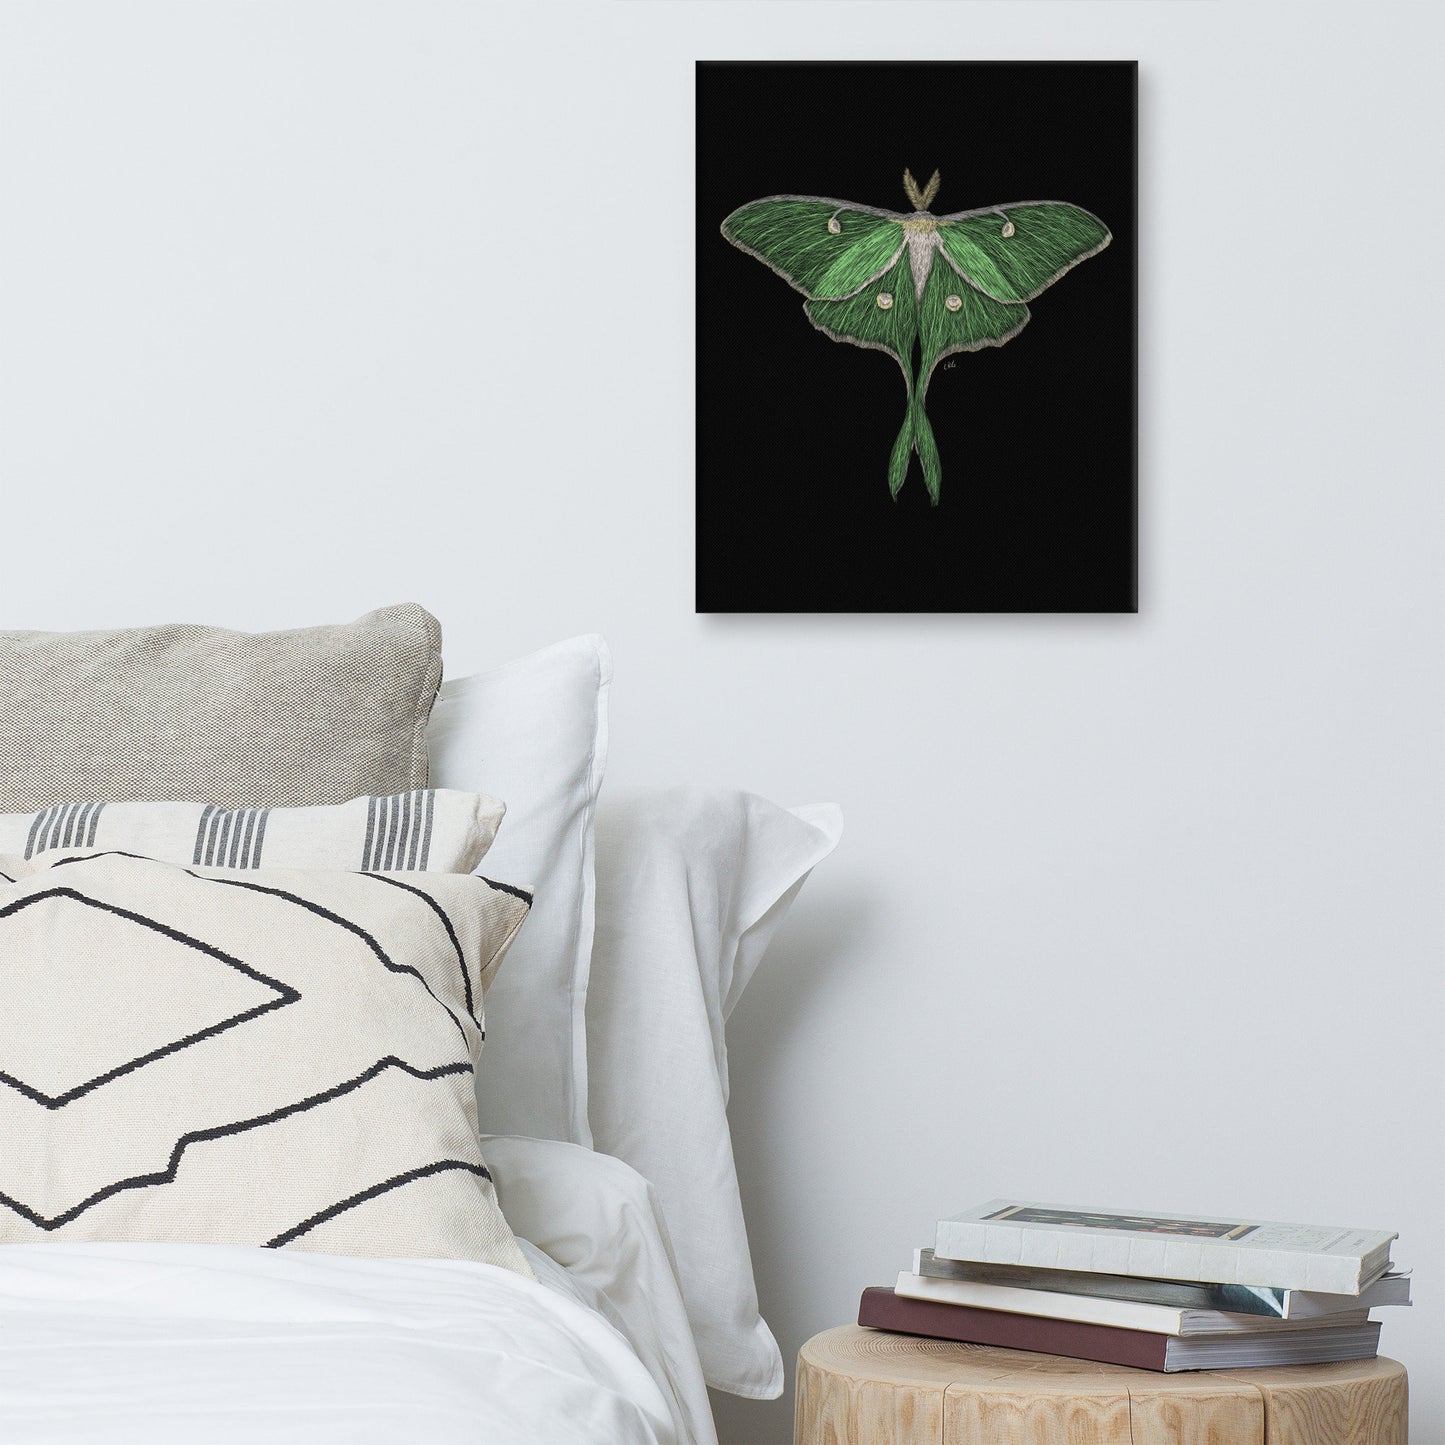 Luna Moth Canvas Art Print